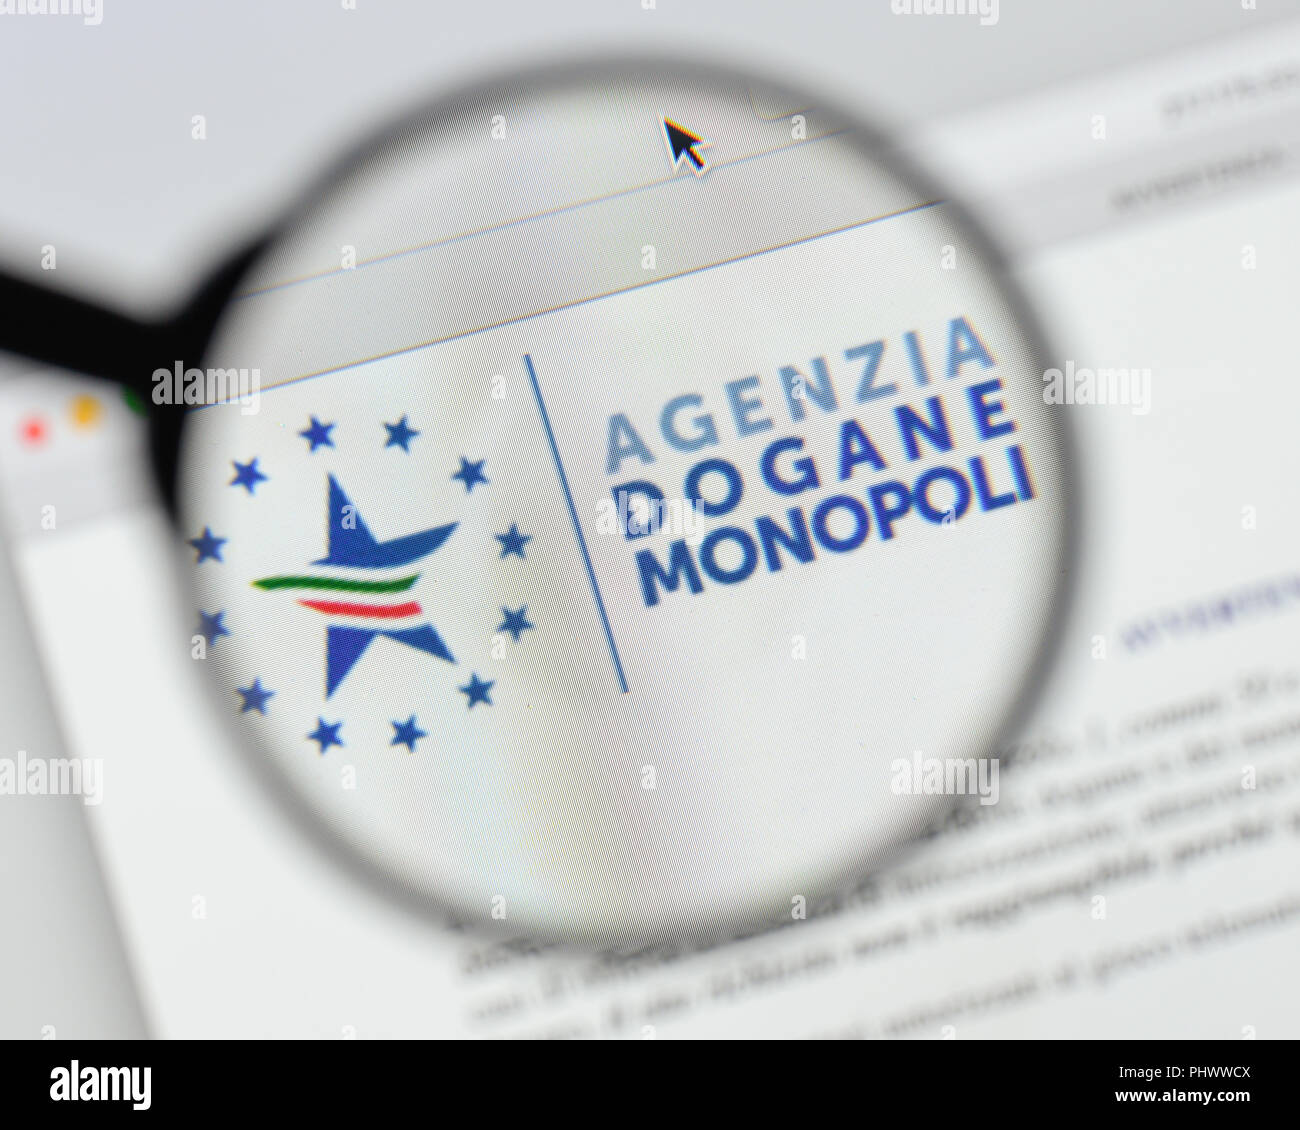 Milan, Italie - 20 août 2018 : Agenzia Dogane e monopoli accueil du site. Agenzia Dogane e logo monopoli visible. Banque D'Images